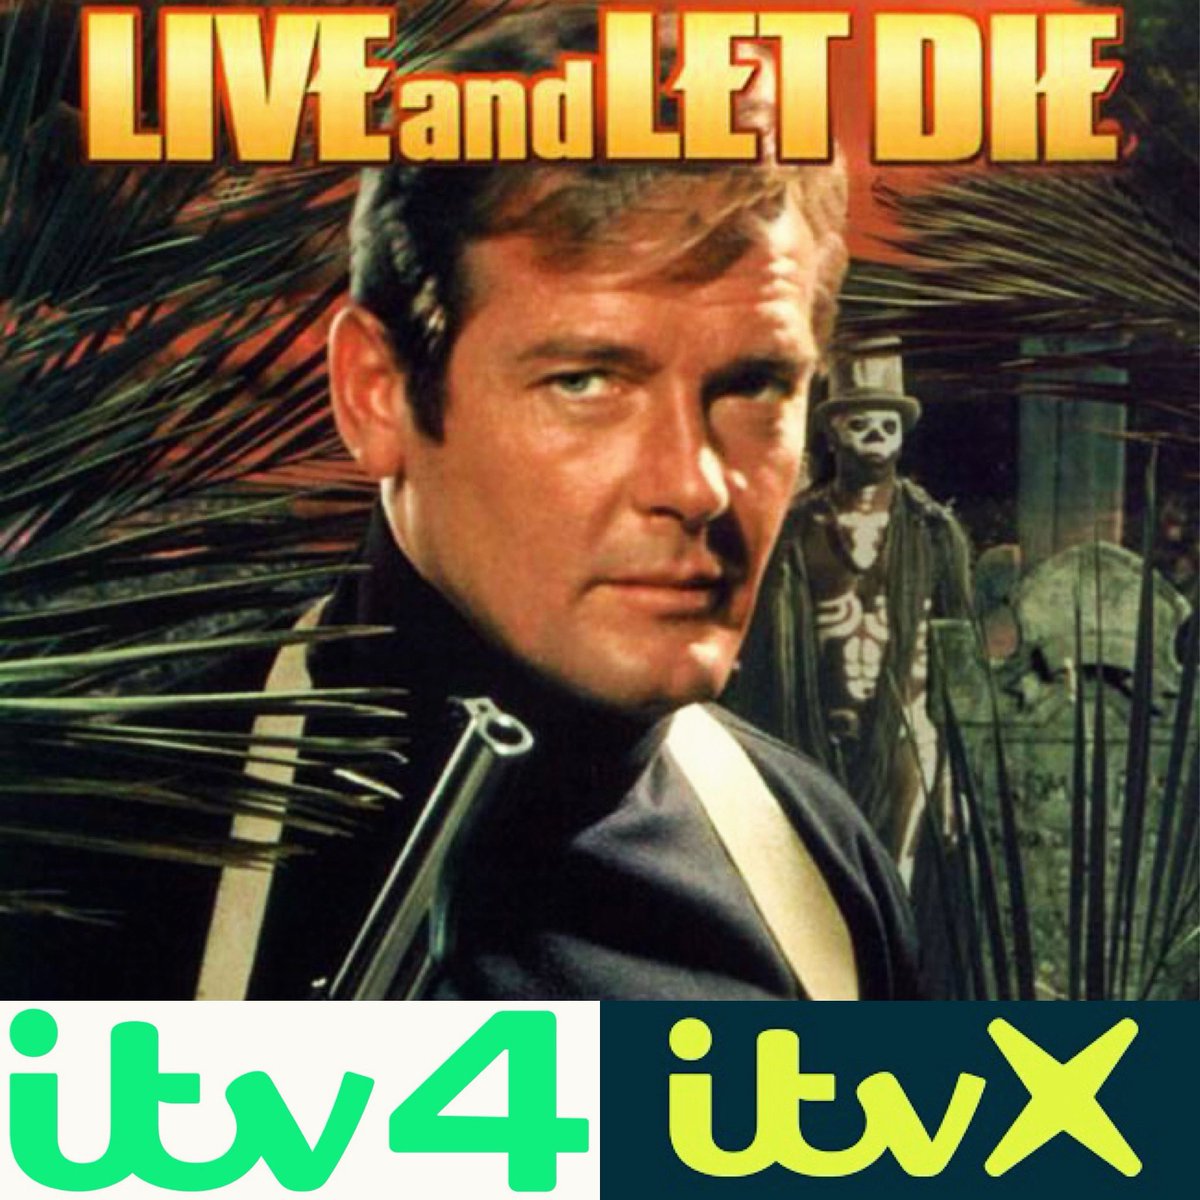 #LiveAndLetDie 8pm ITV4

🎥youtu.be/LecYffrolEk